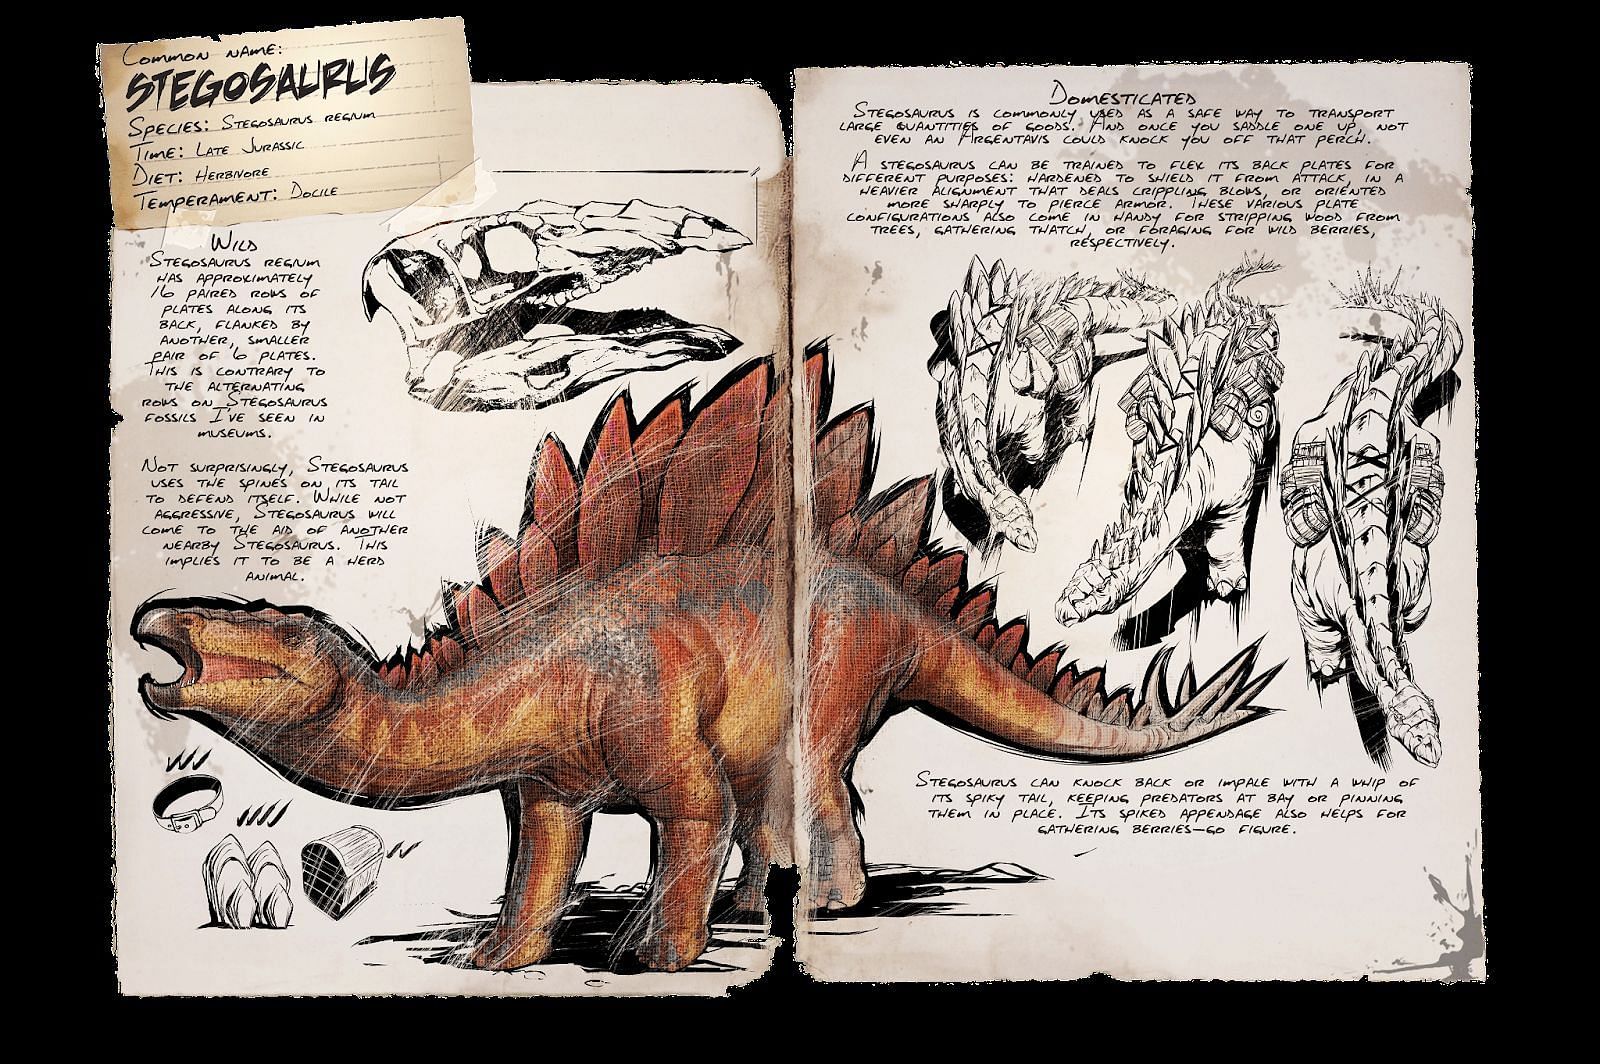 Stegosaurus (Image via ark.fandom.com)